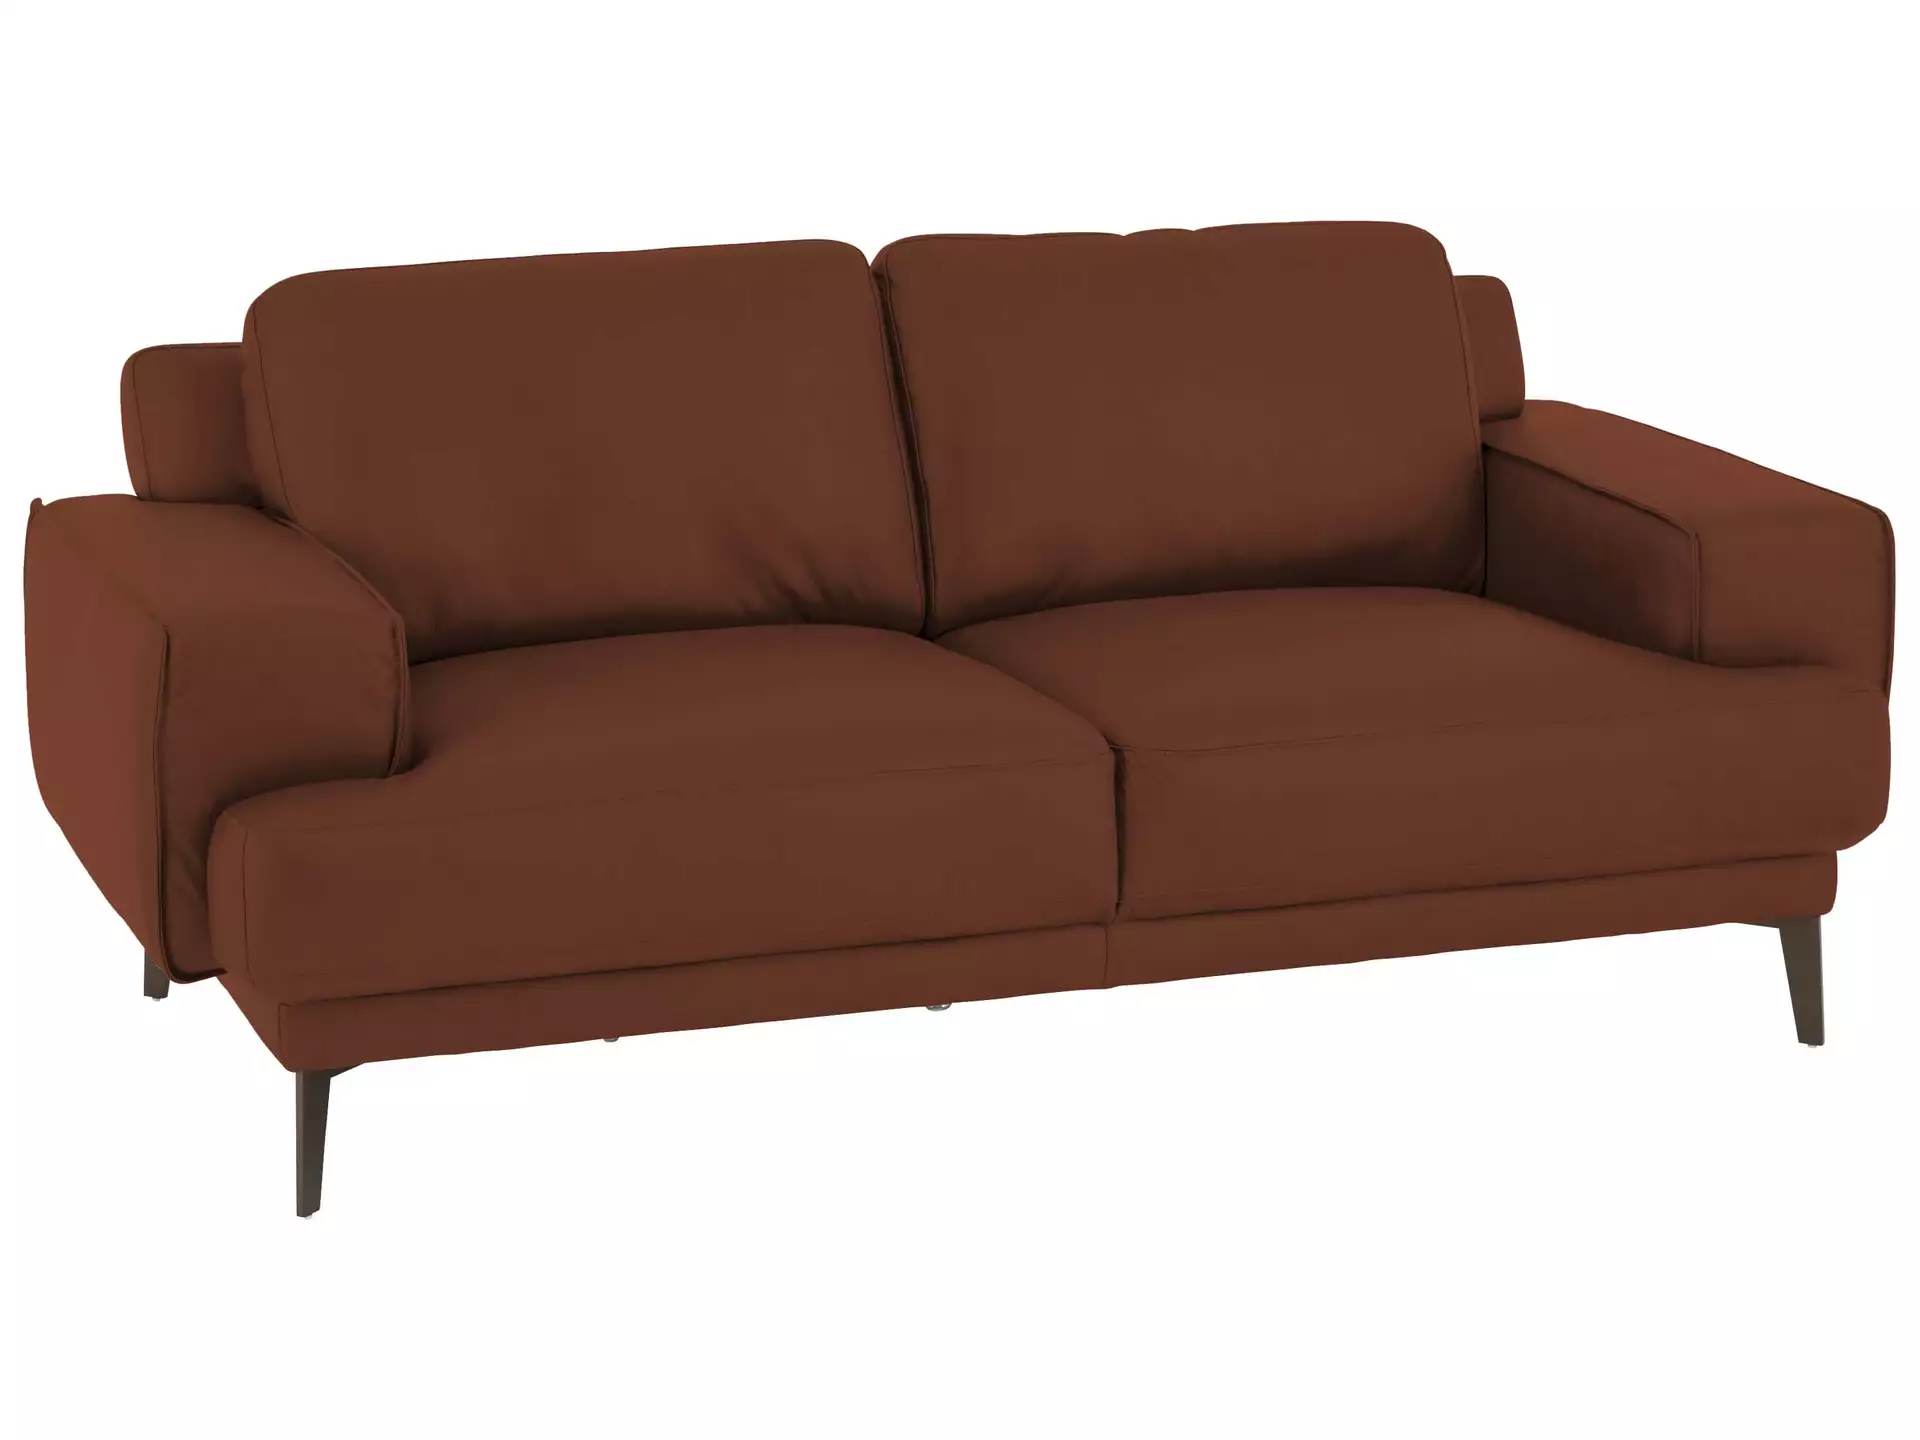 Sofa Foscaari Basic B: 193 cm Schillig Willi / Farbe: Hazelnut / Material: Leder Basic